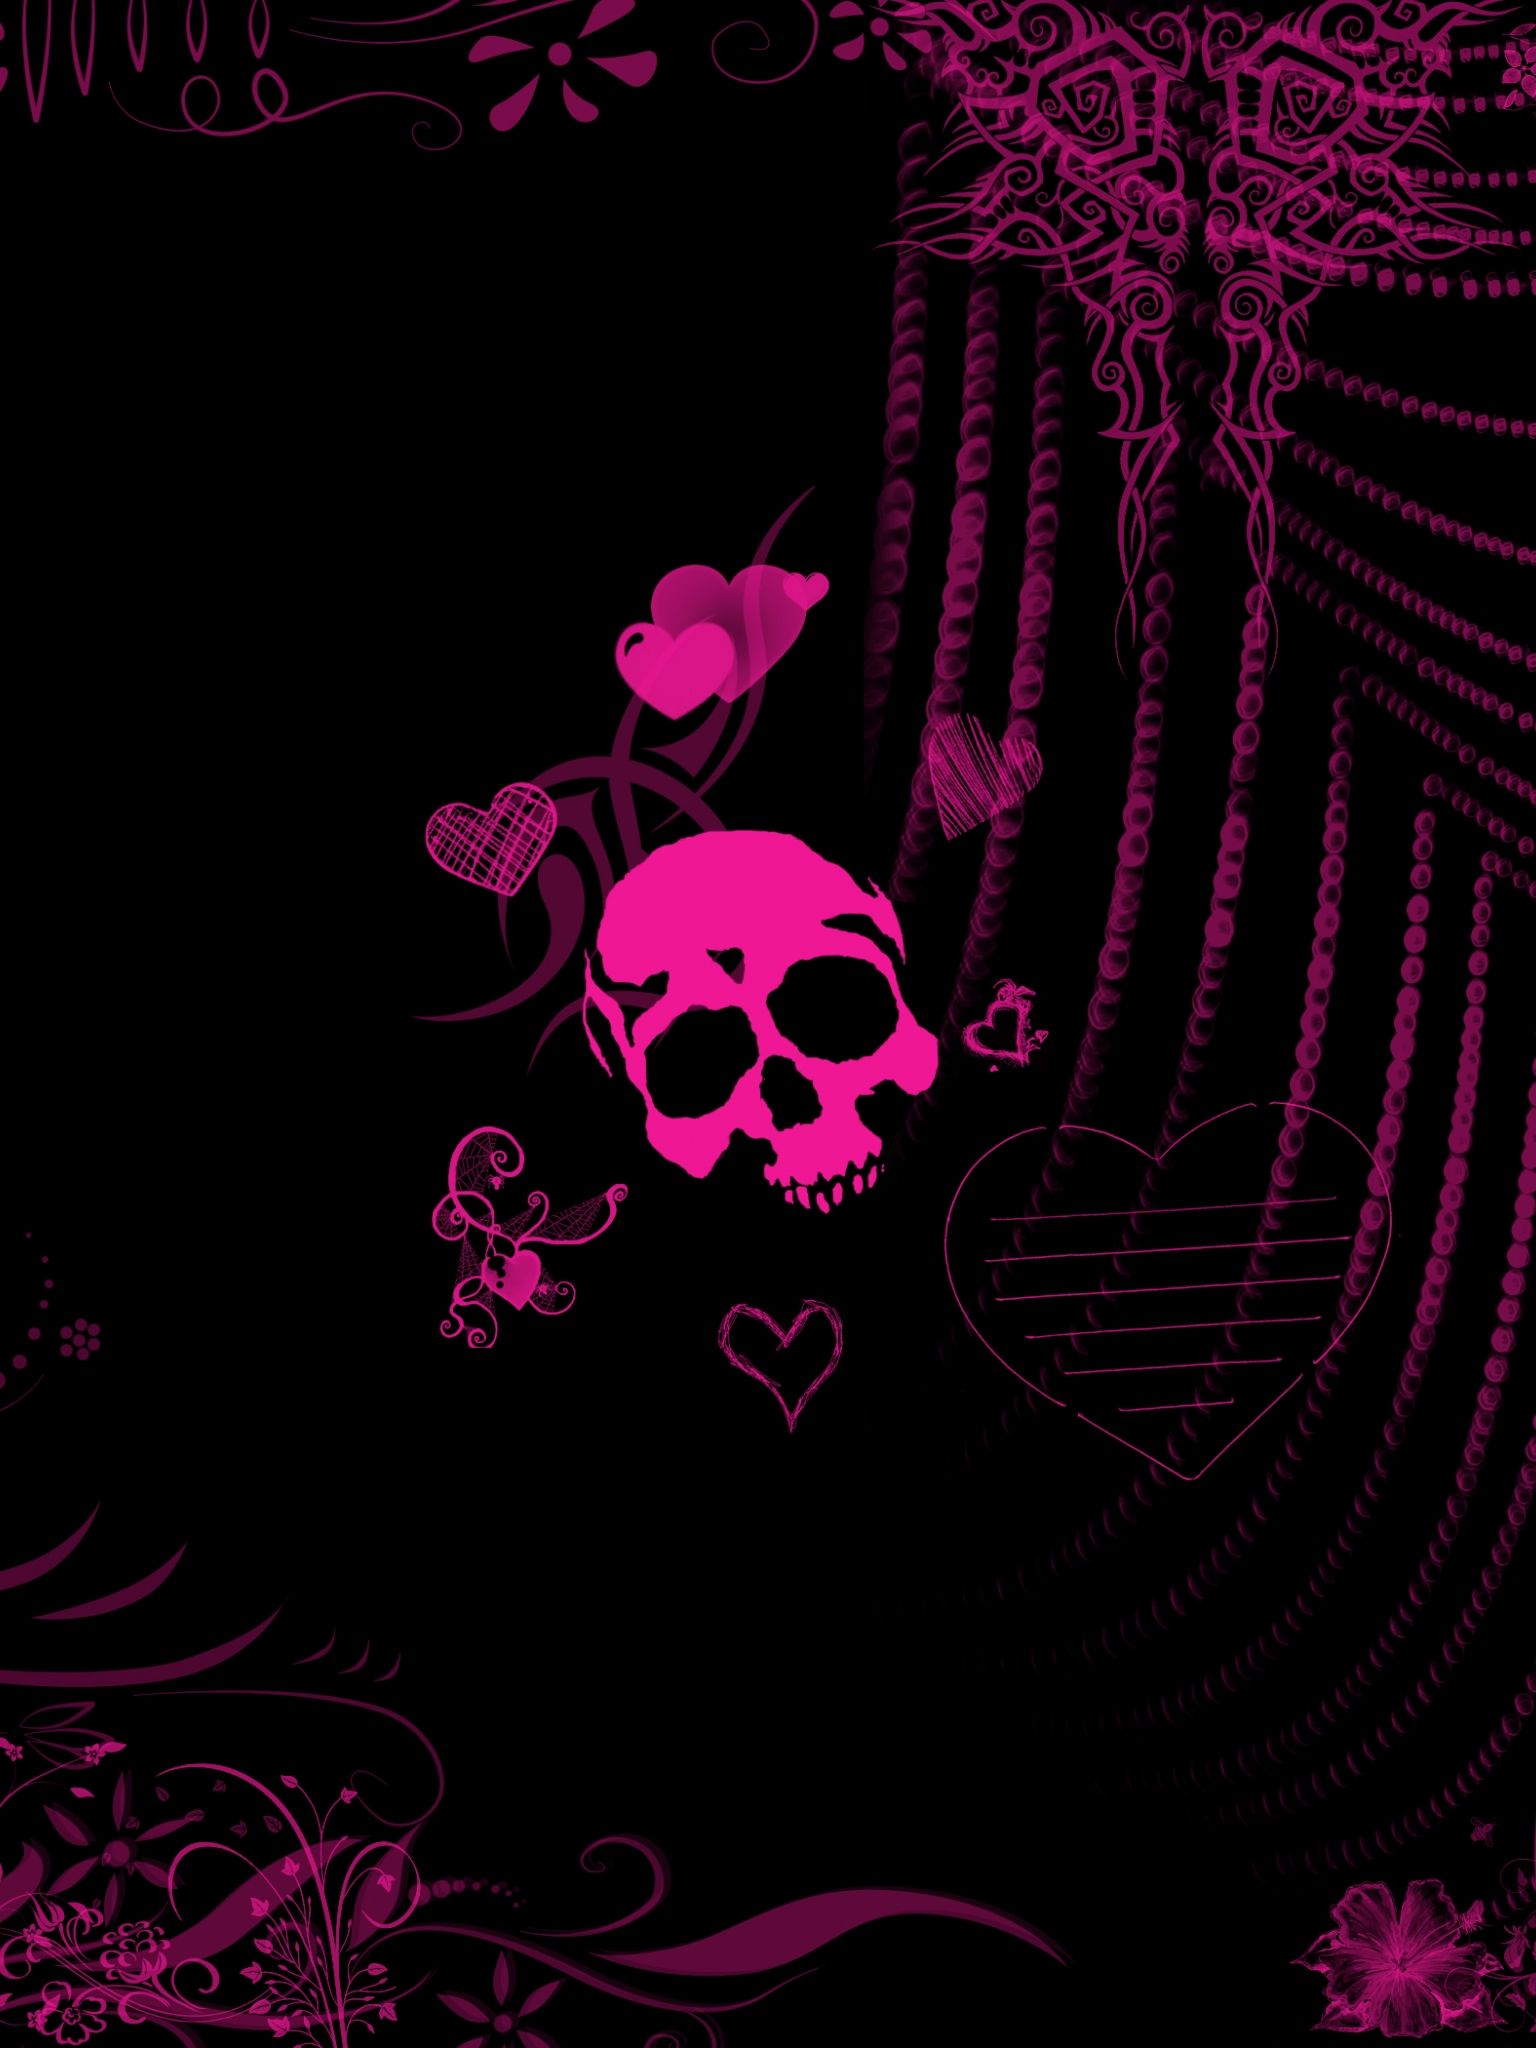 Free download Pink Skull by Daemonika [2800x2100] for your Desktop, Mobile & Tablet. Explore Pink Skull Wallpaper. Skull And Bones Wallpaper, Blue Line Skull Wallpaper, Free Skull Wallpaper for Laptop